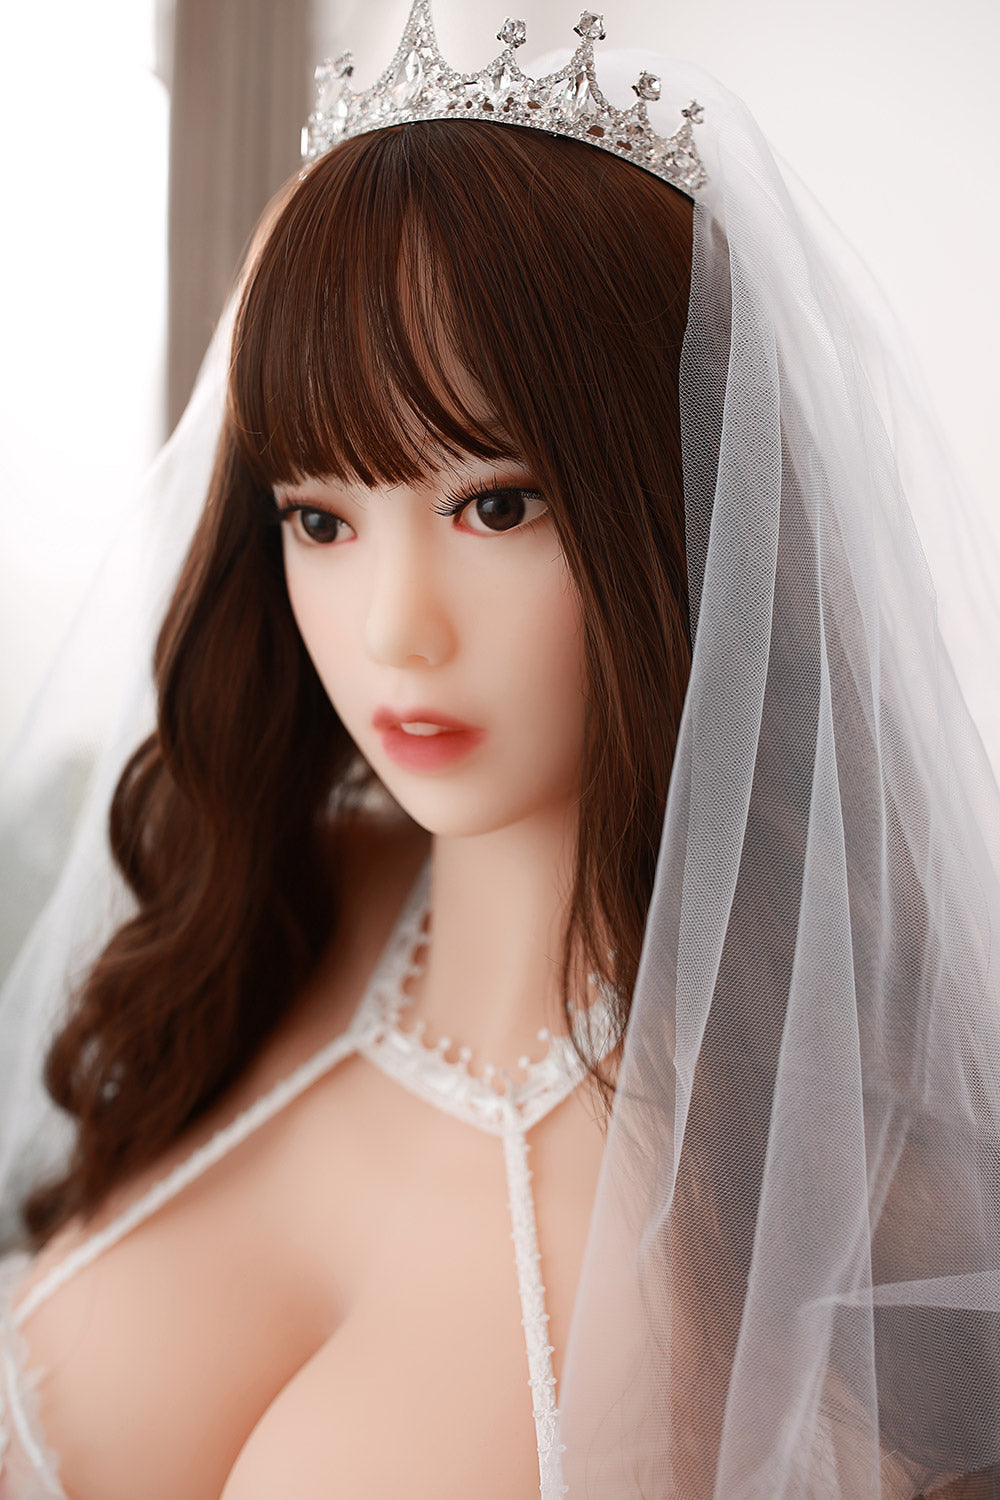 US Stock - Ariadne 165cm #33 Big Boobs Wedding Girl TPE Sex Doll Jelly Breasts Love Doll